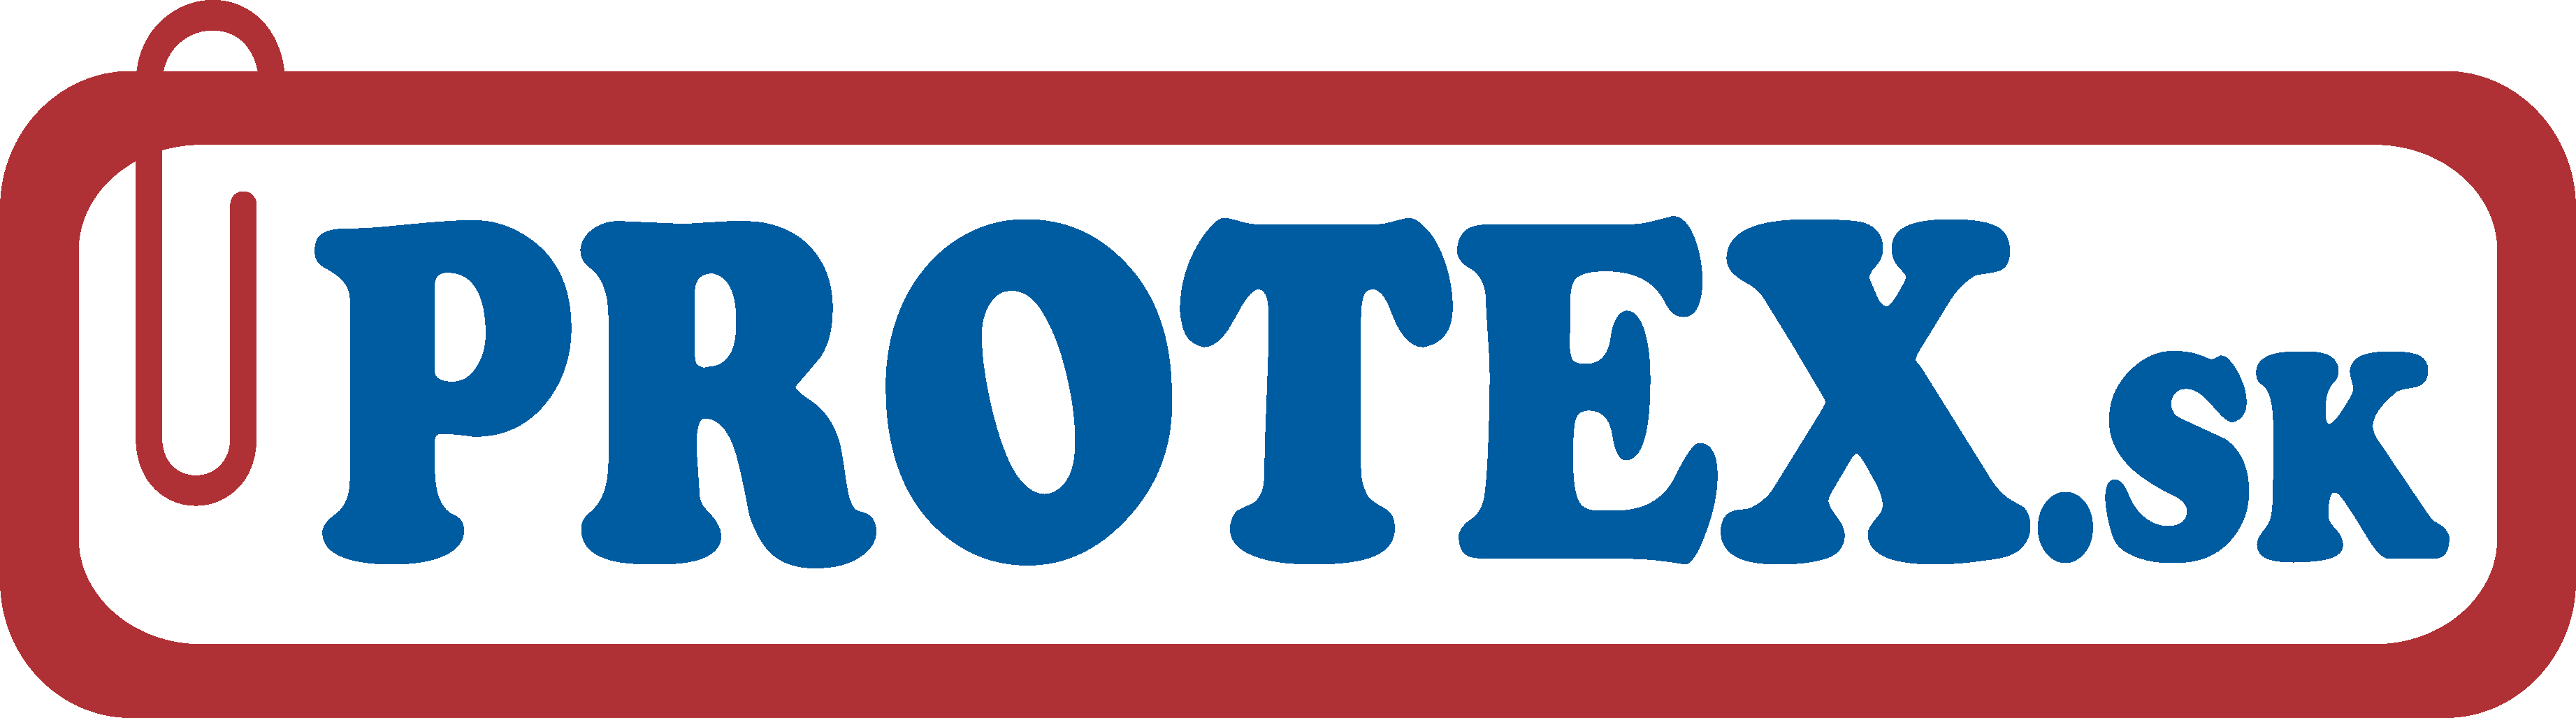 Protex logo - Papiernictvo, kancelárske potreby